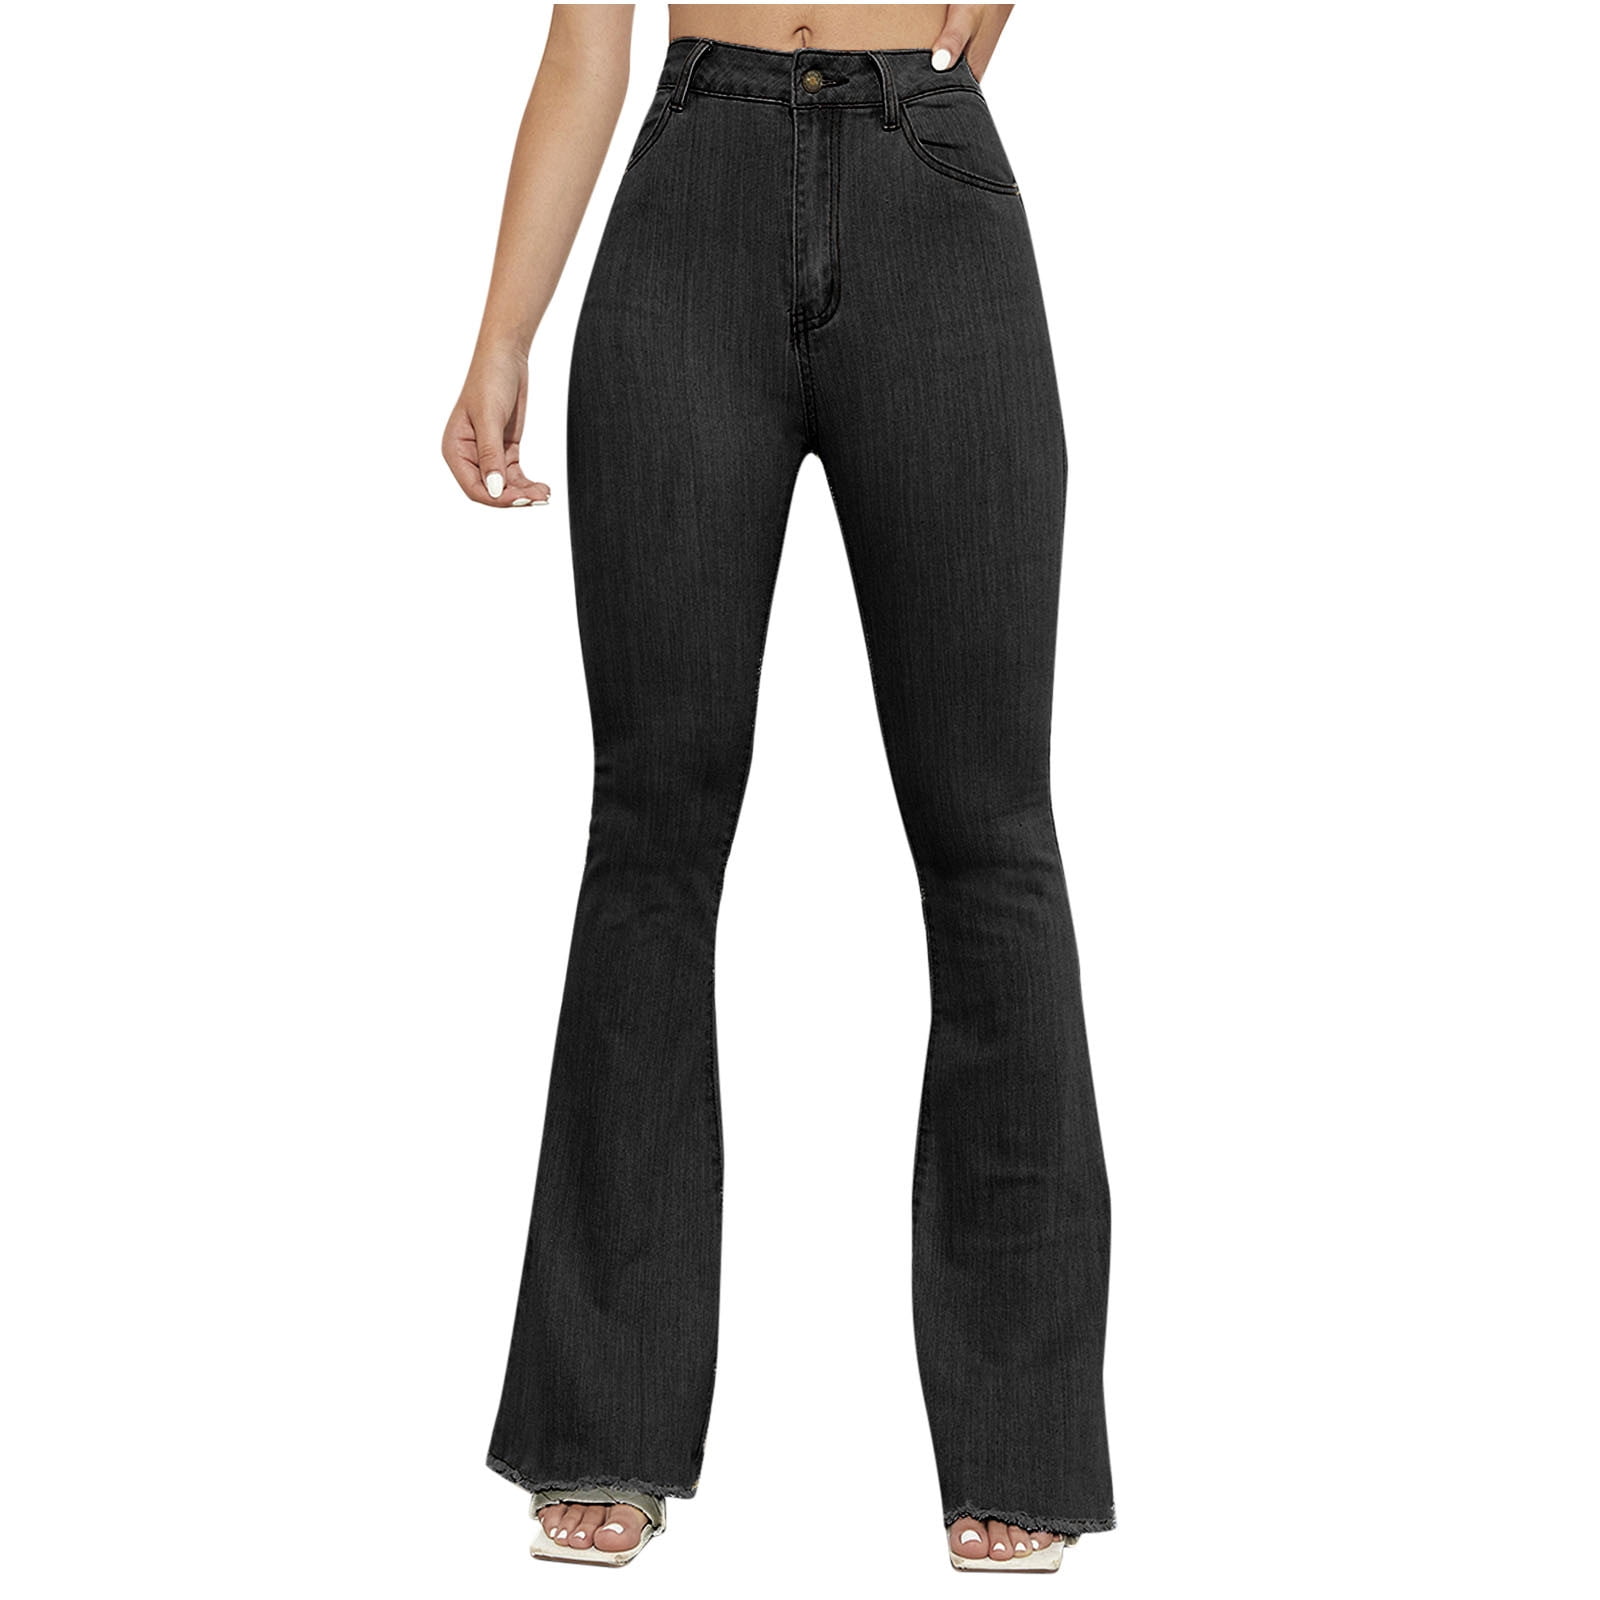 HTNBO High Waist Flare Jeans for Women Casual Wide Leg Bell Bottom